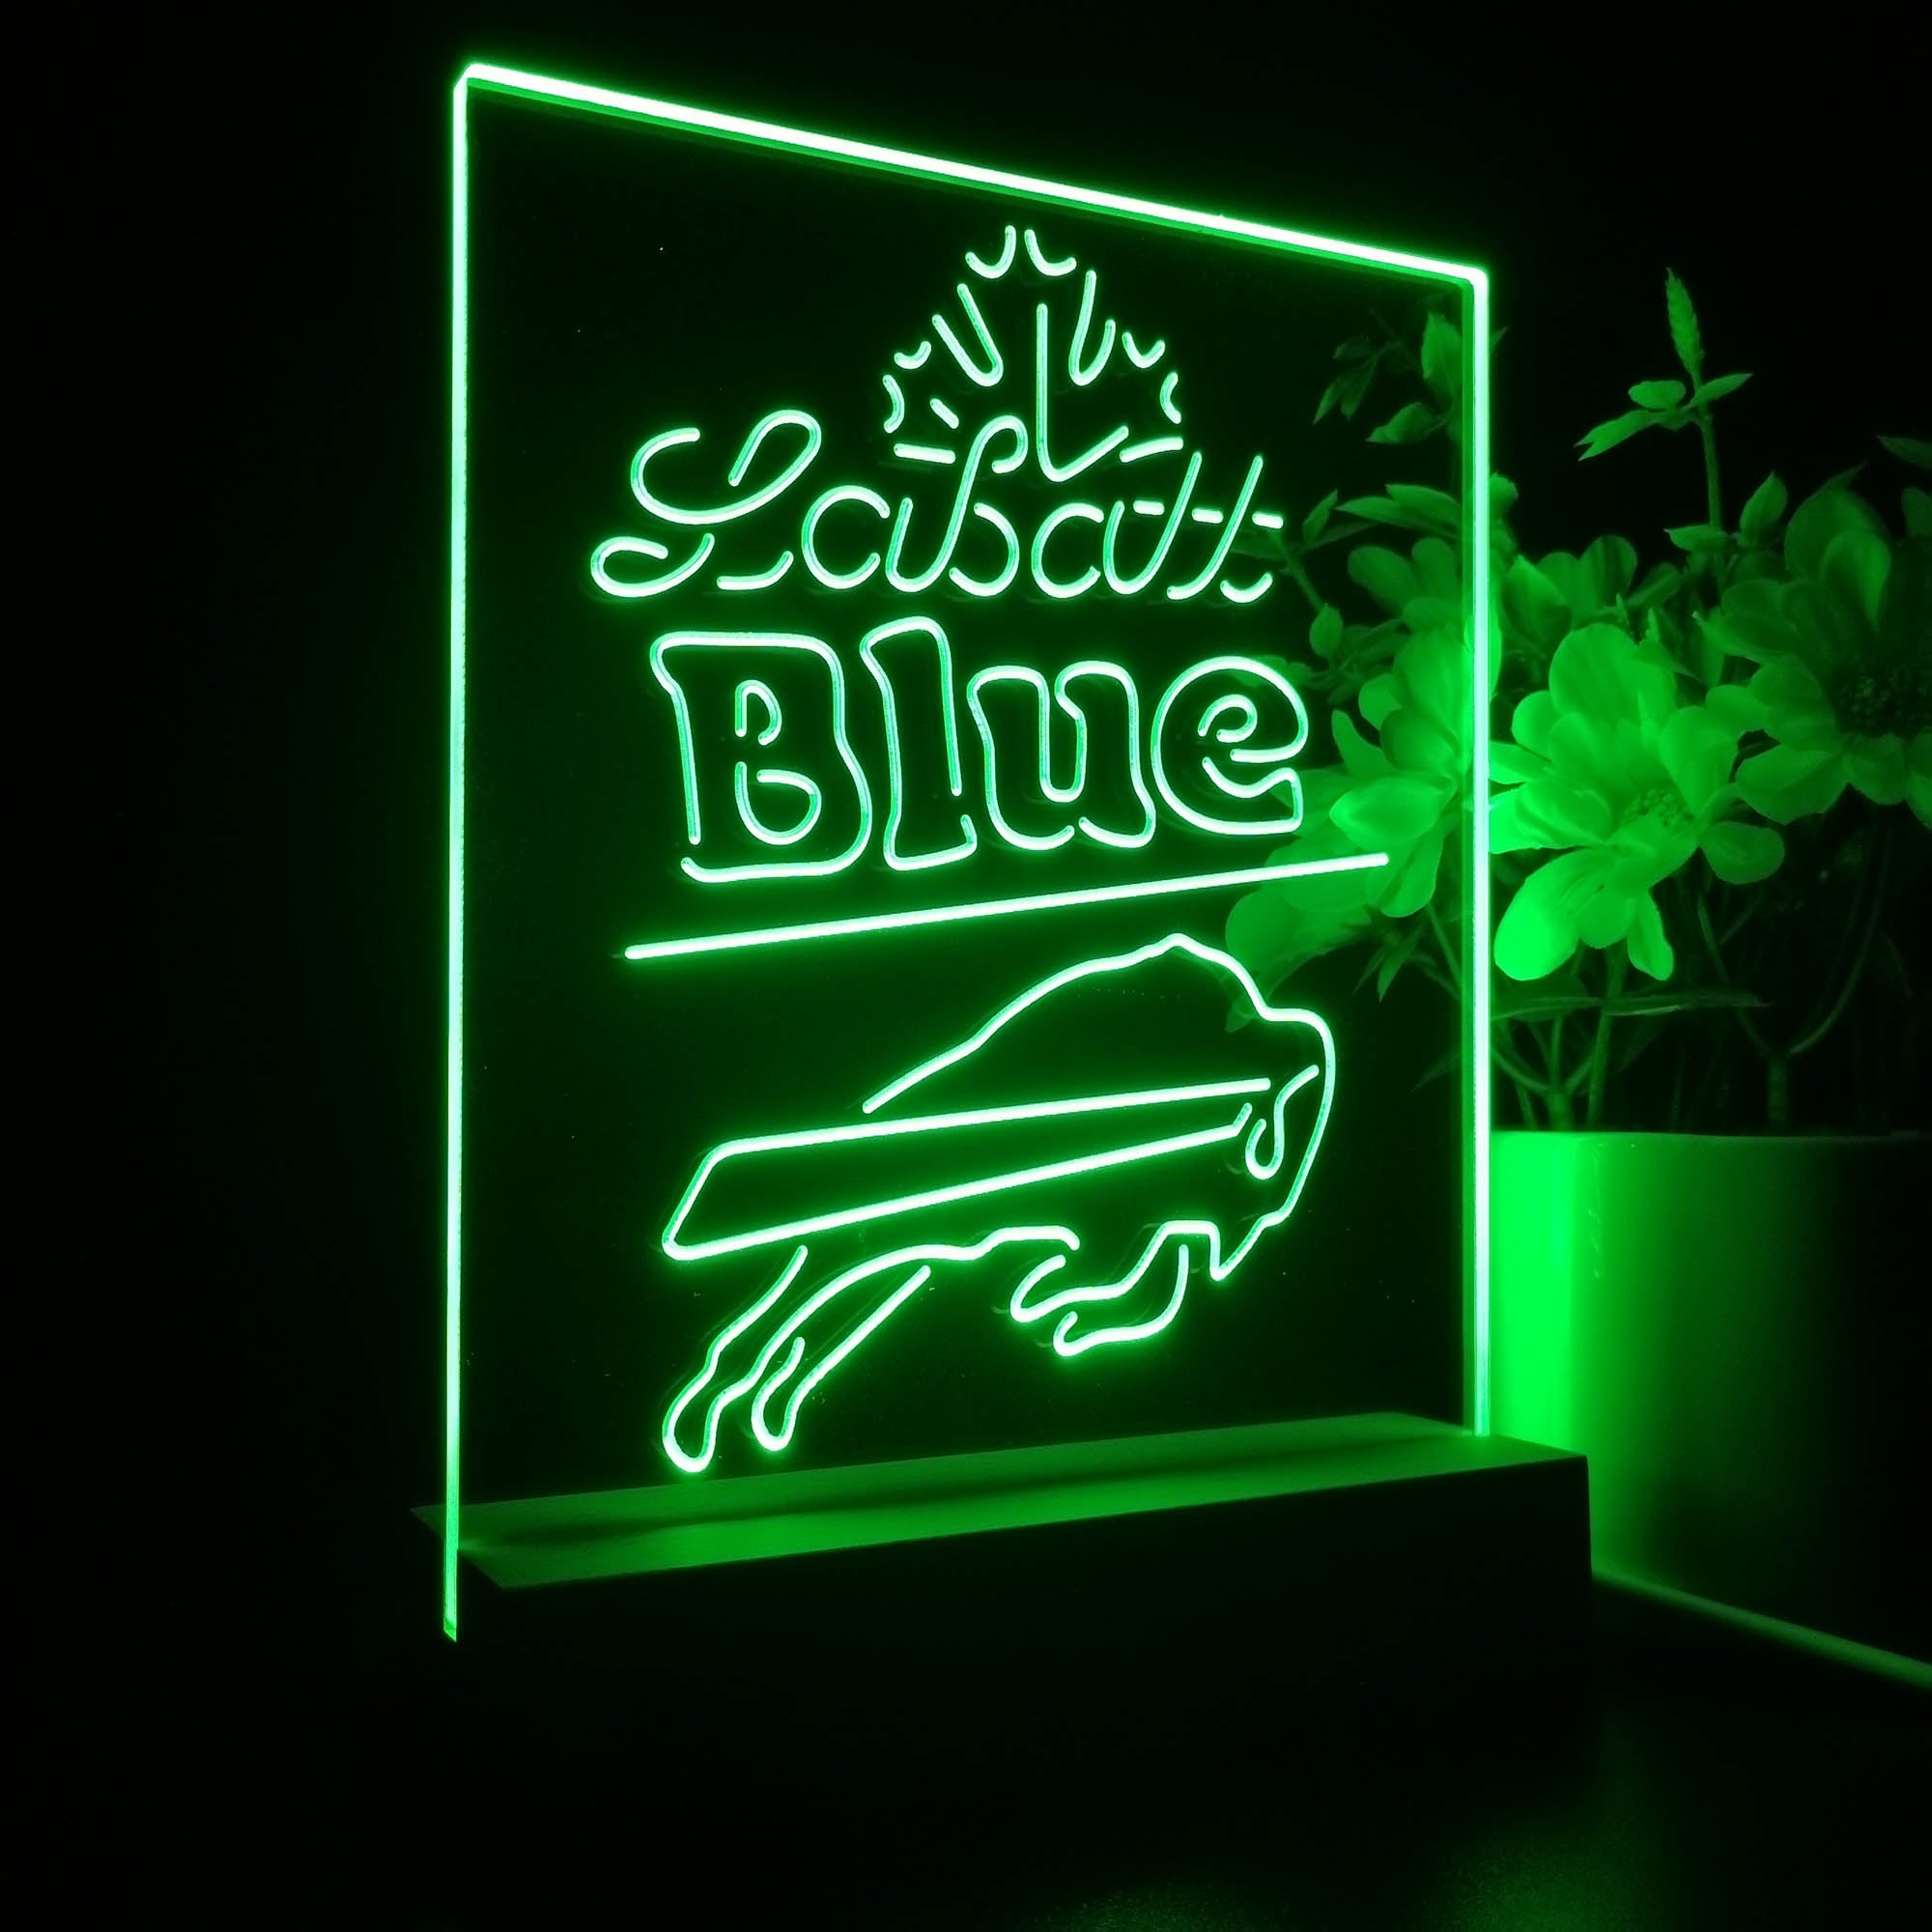 Labatt Blue Buffalo Bills 3D LED Optical Illusion Sport Team Night Light